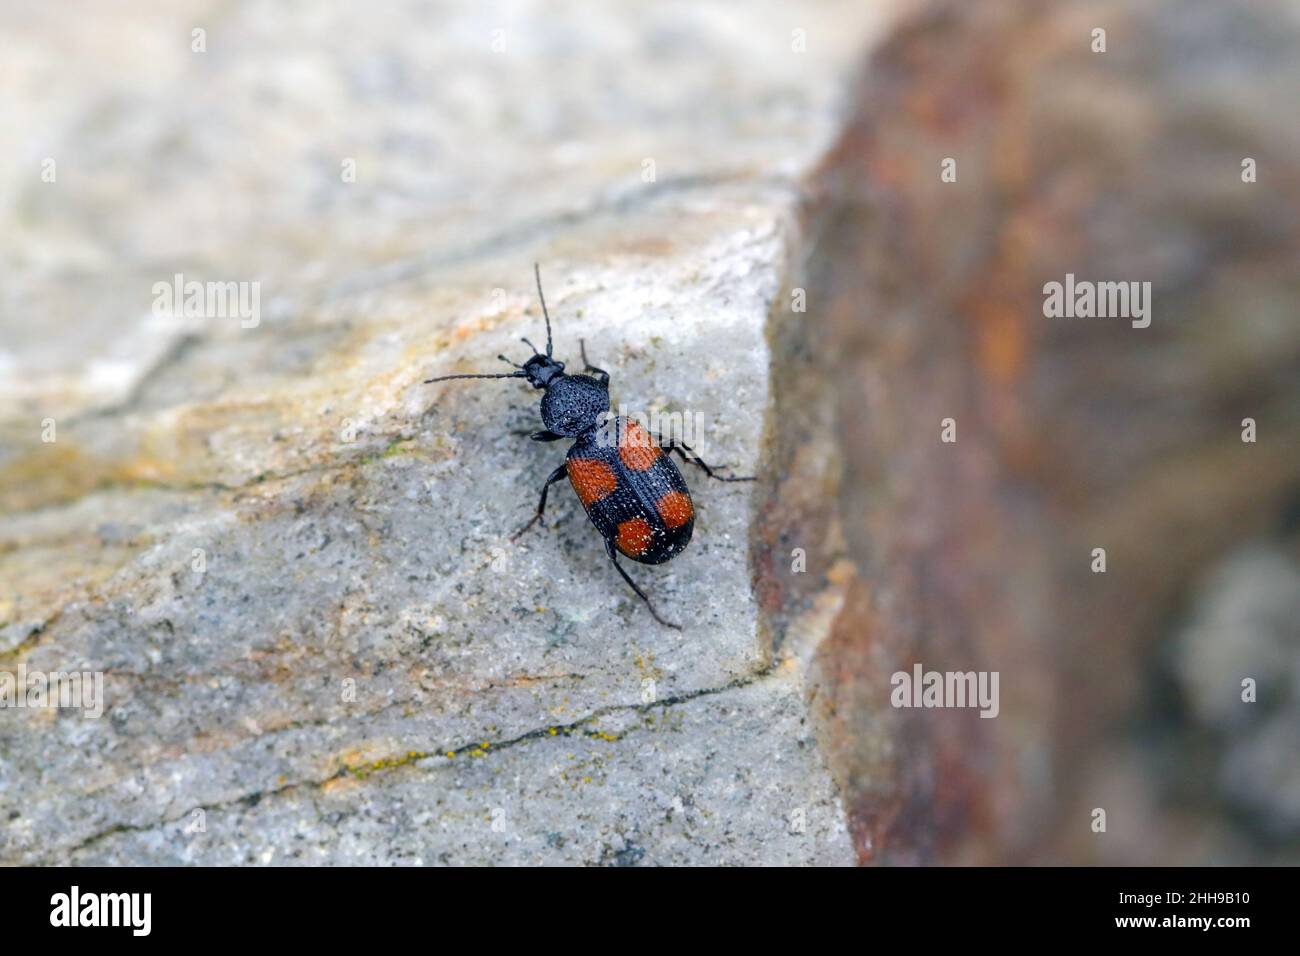 A beautiful representative of the Carabidae - family (Ground Beetles) - Panagaeus cruxmajor on a rock. Stock Photo